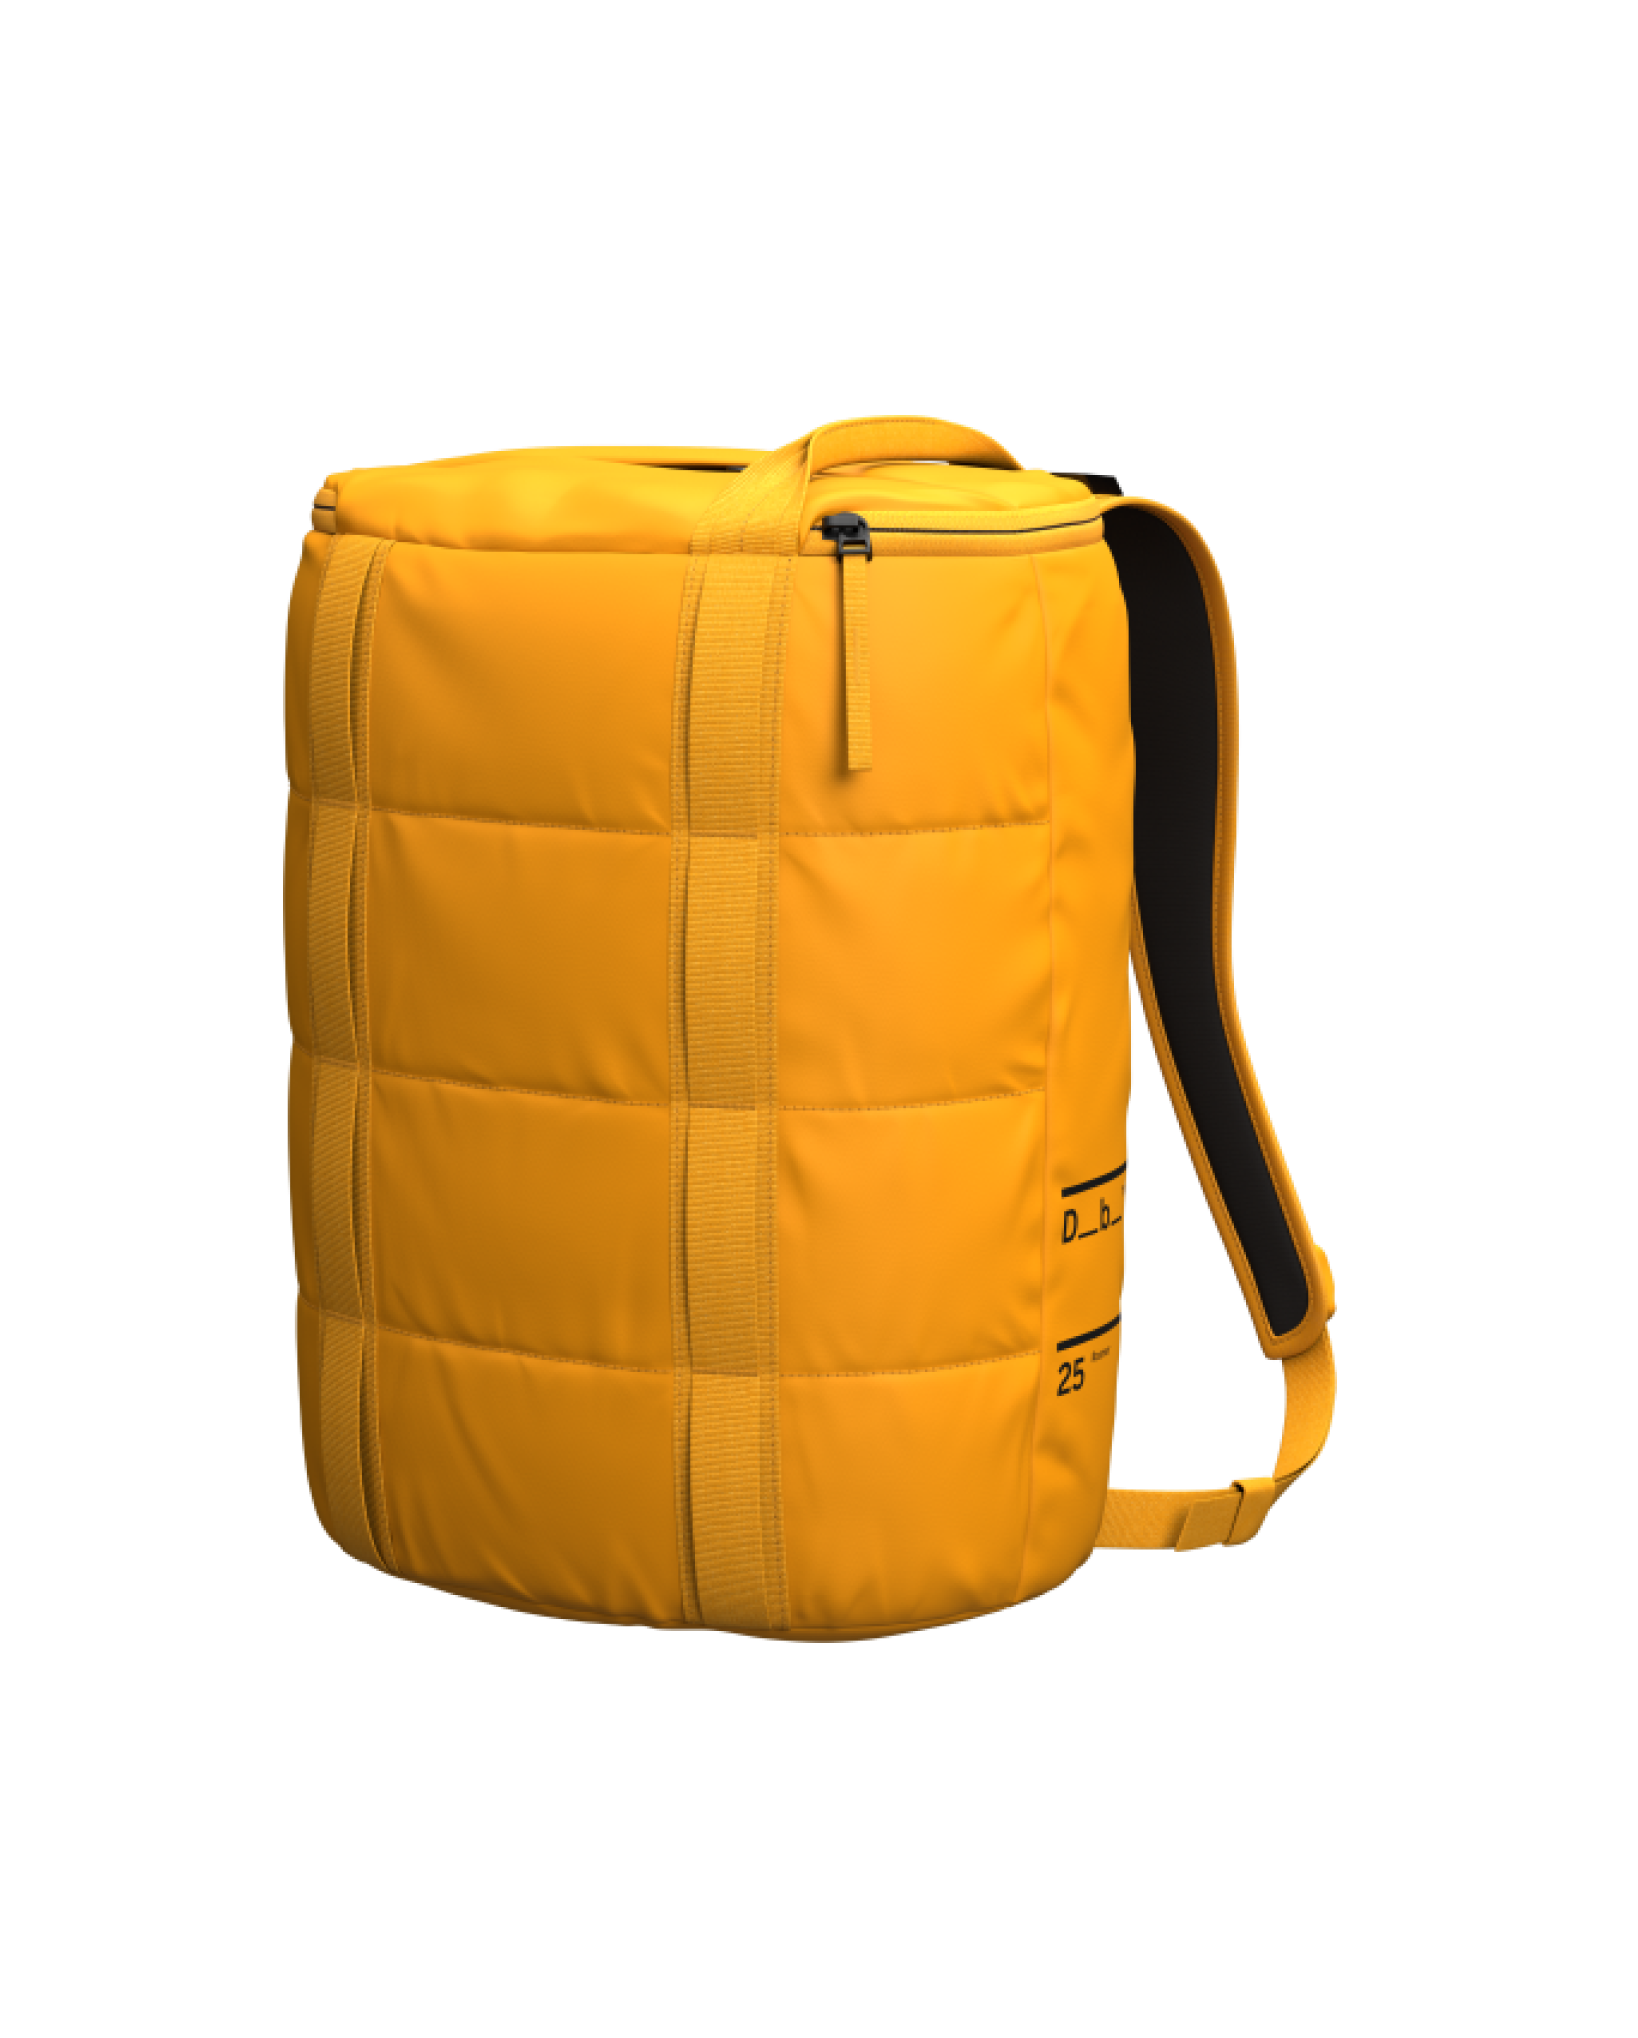 Roamer Duffel Backpack 25L Parhelion Orange Parhelion Orange